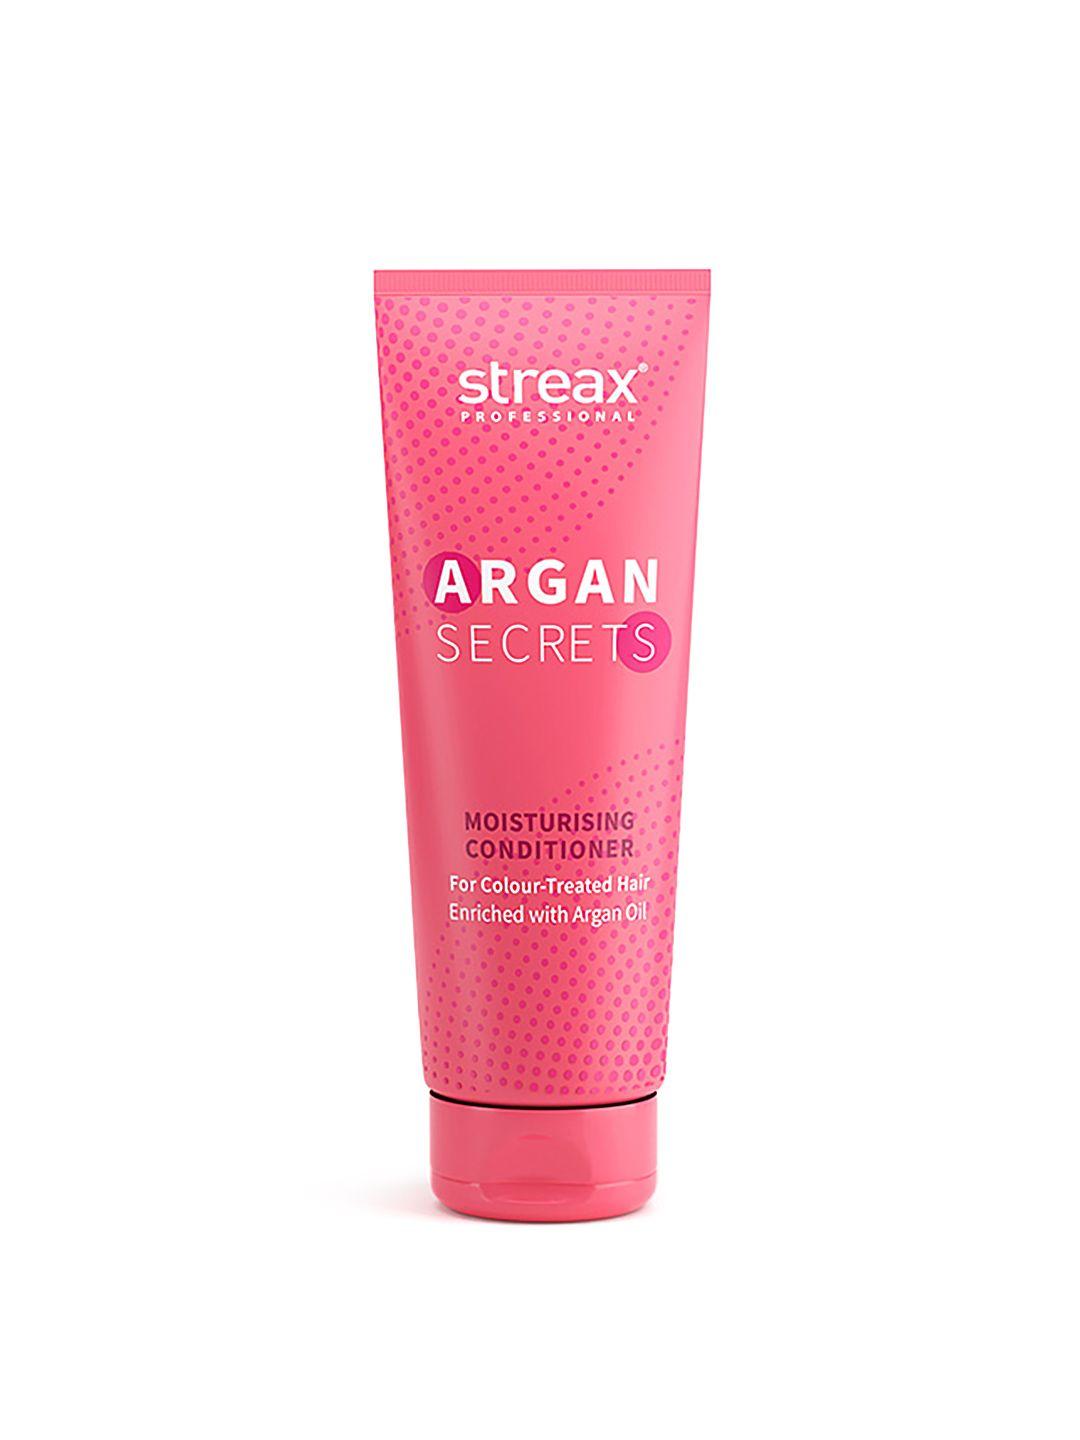 streax professional argan secrets moisturising conditioner for colour-treated hair - 240g